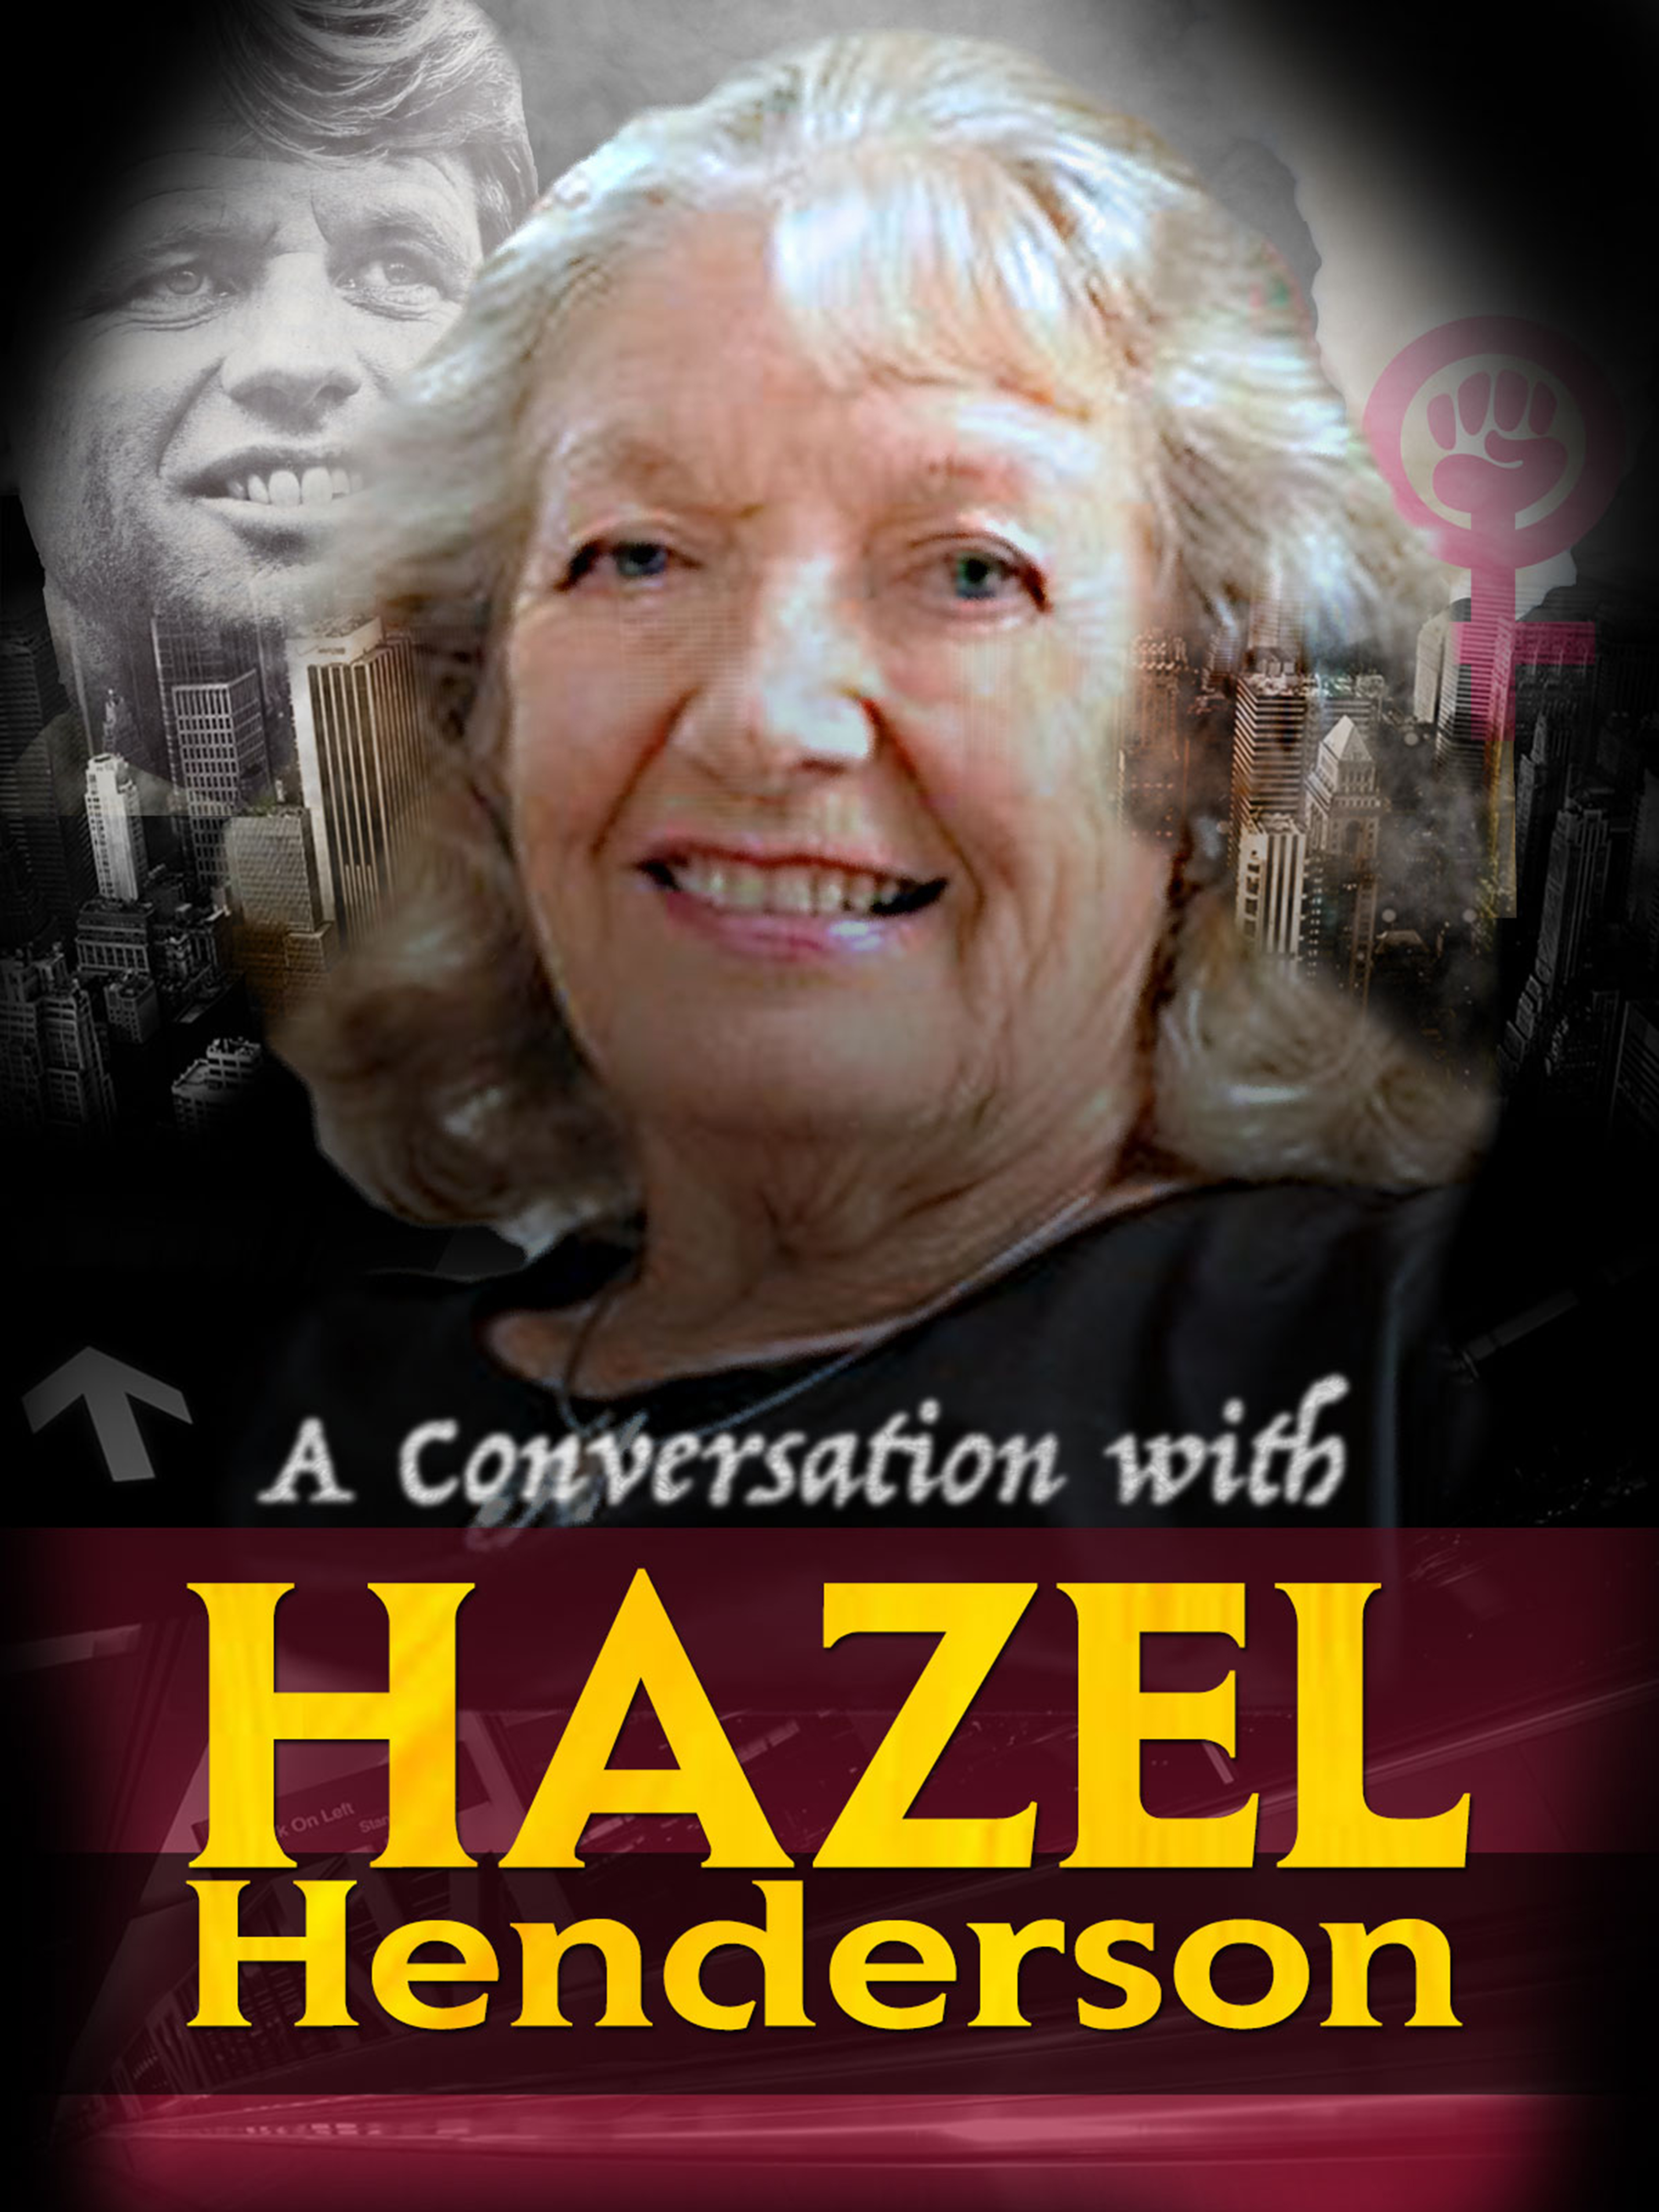 A Conversation with Hazel Henderson